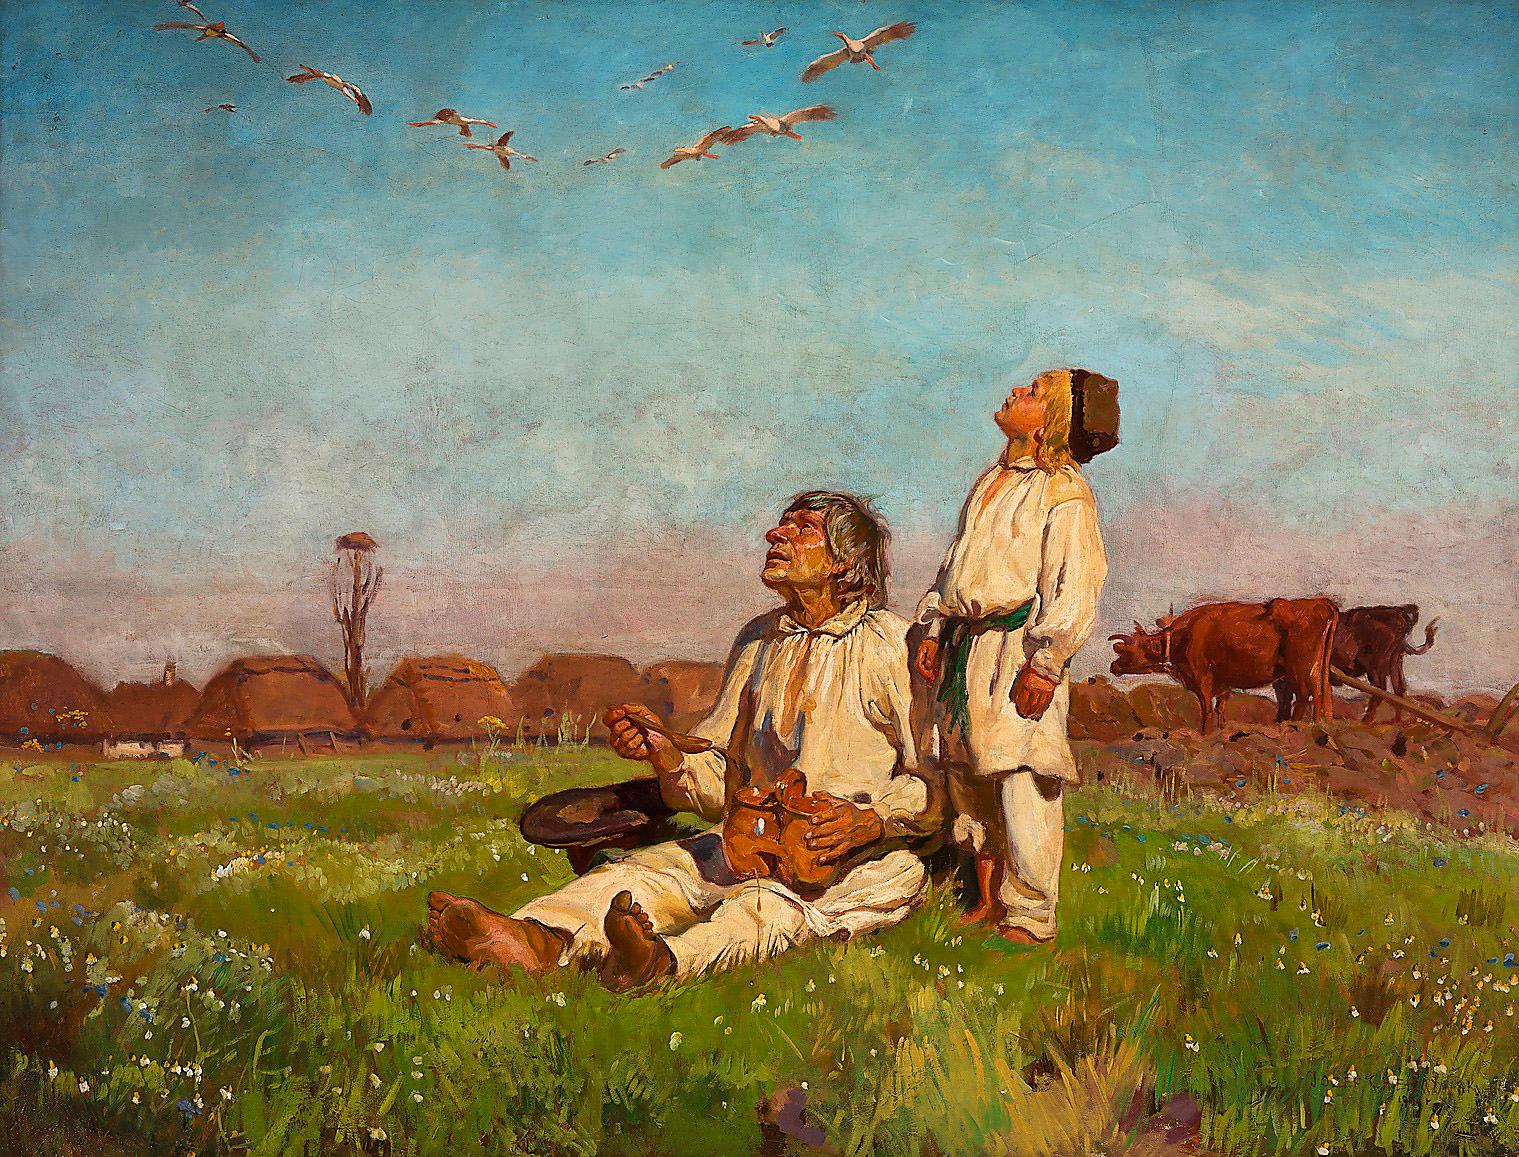 Józef Chełmonski, ”Storkar”, 1900. 